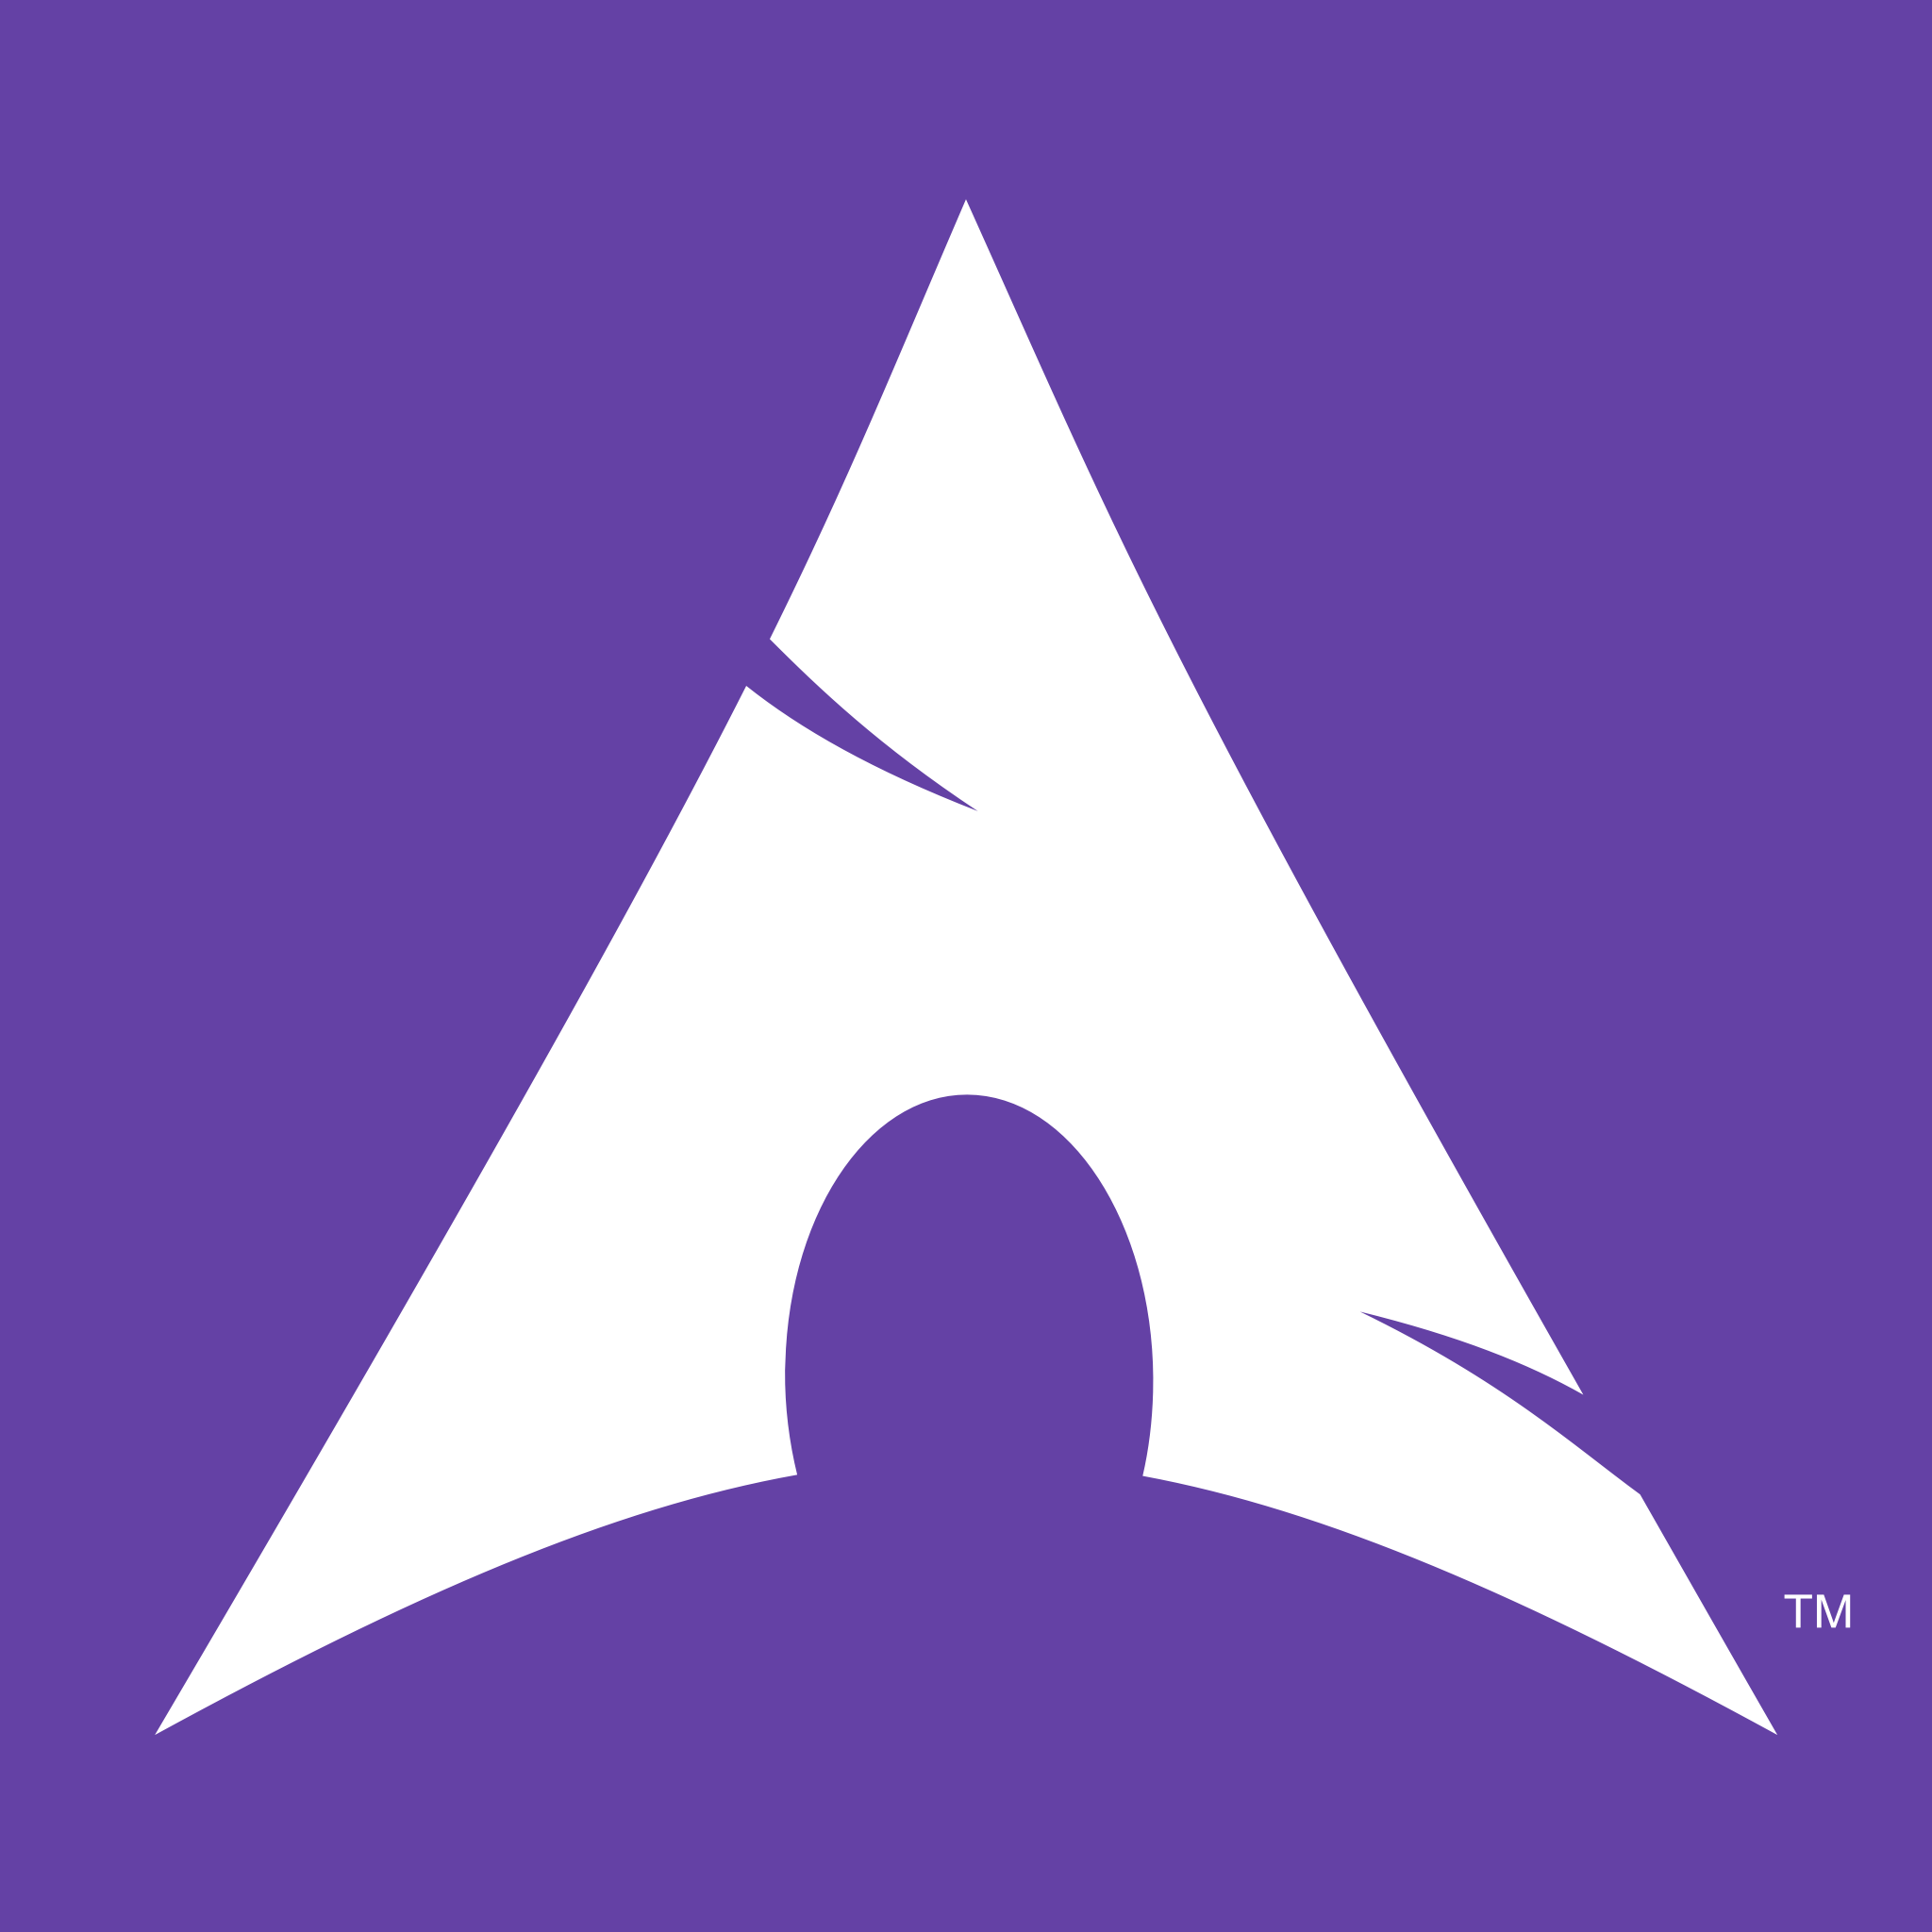 The Twitch installs Arch logo